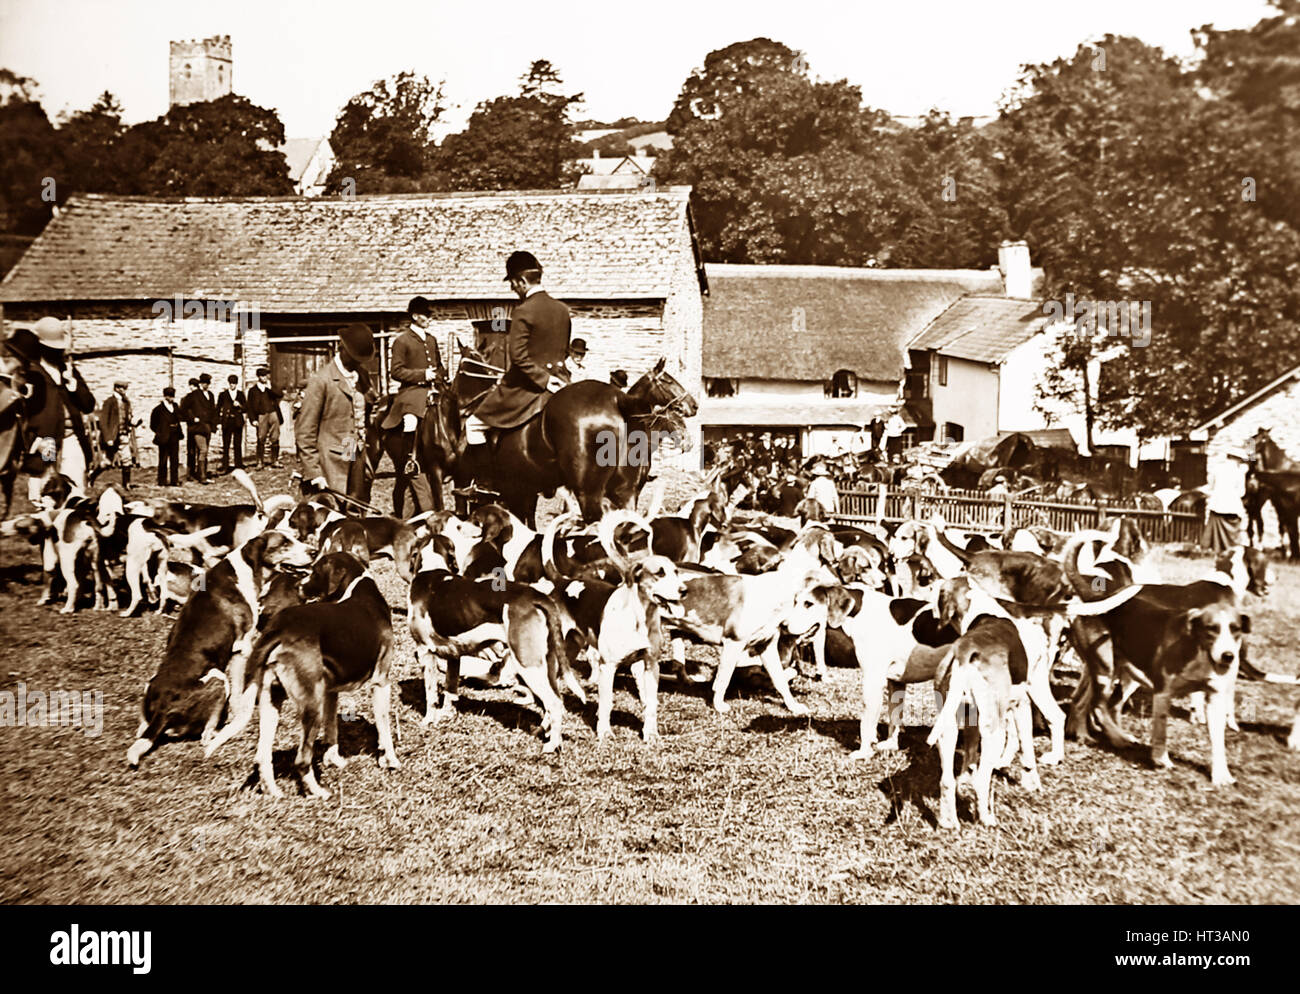 Reunirse en Winsford Staghounds en Somerset - período Victoriano Foto de stock